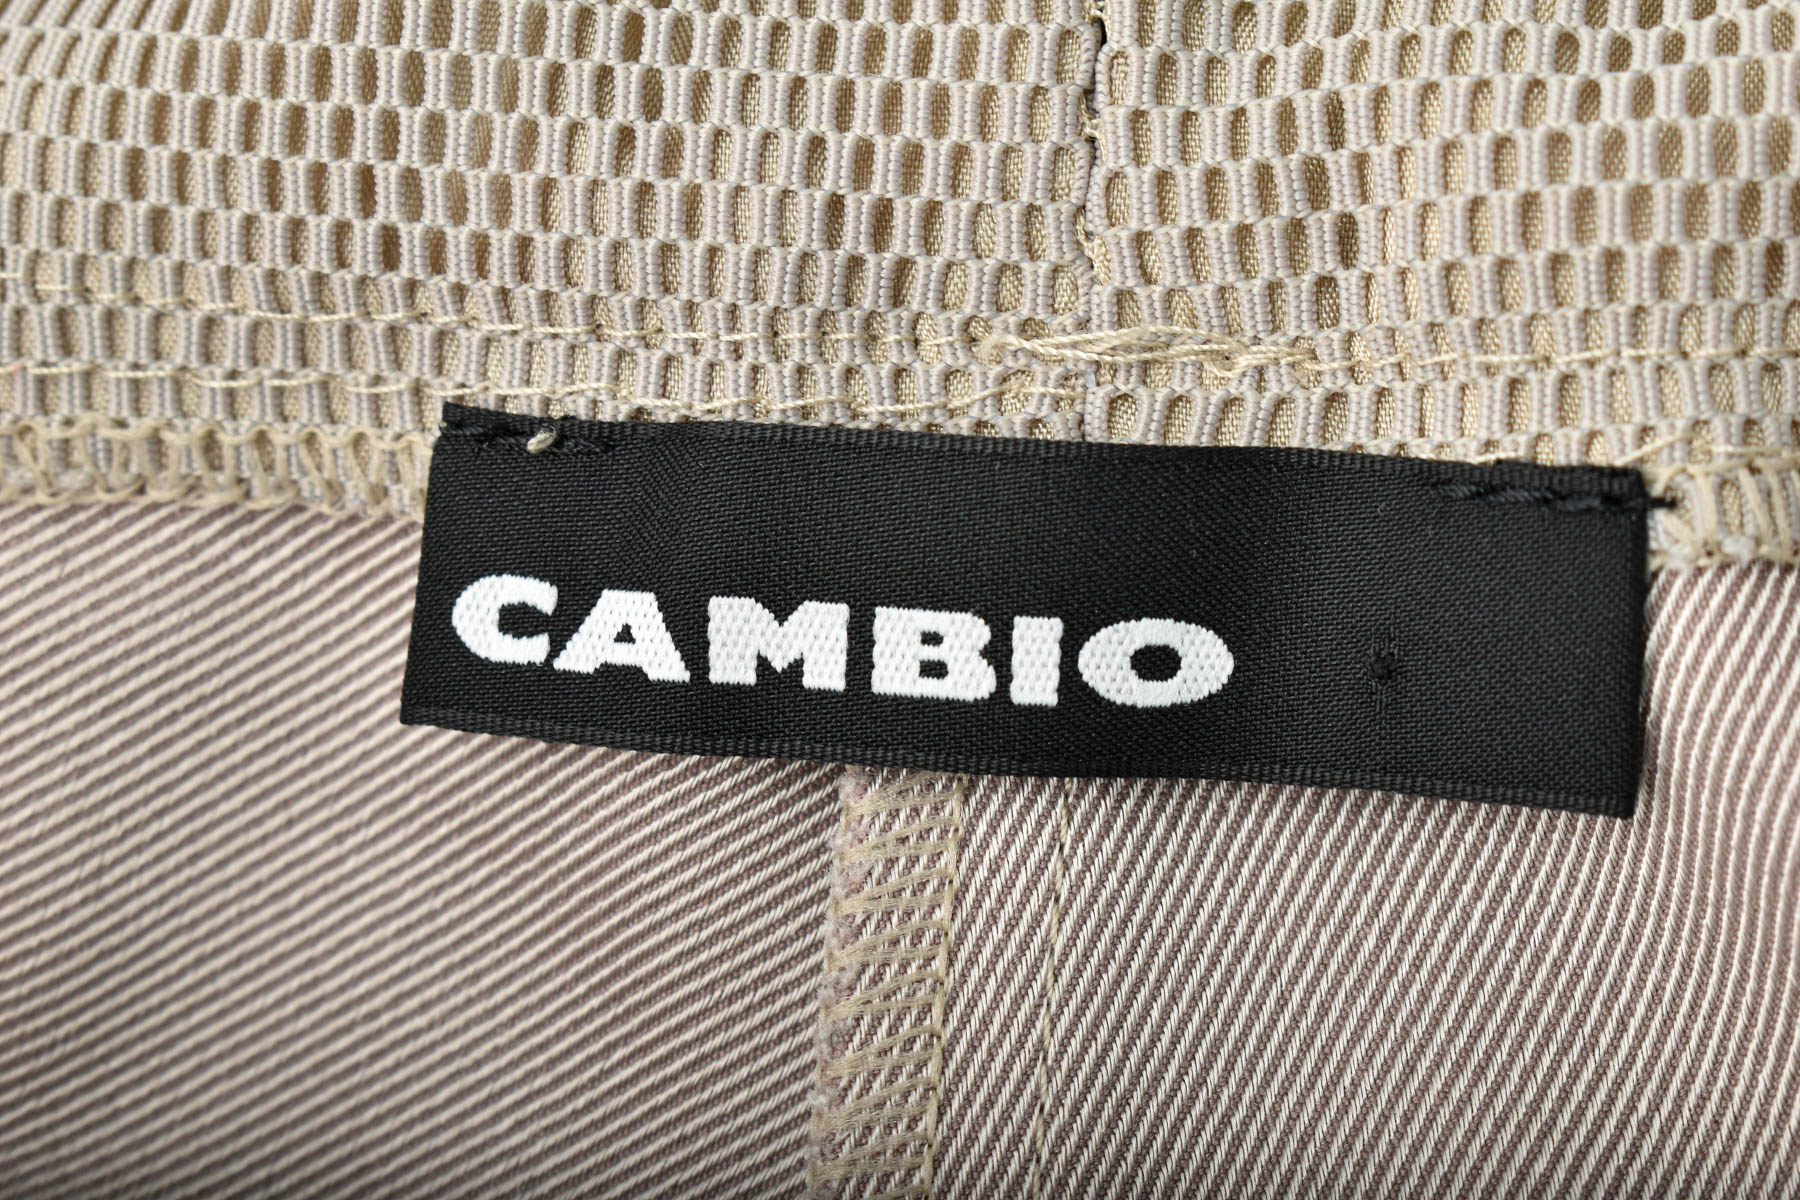 Pantaloni de damă - Cambio - 2